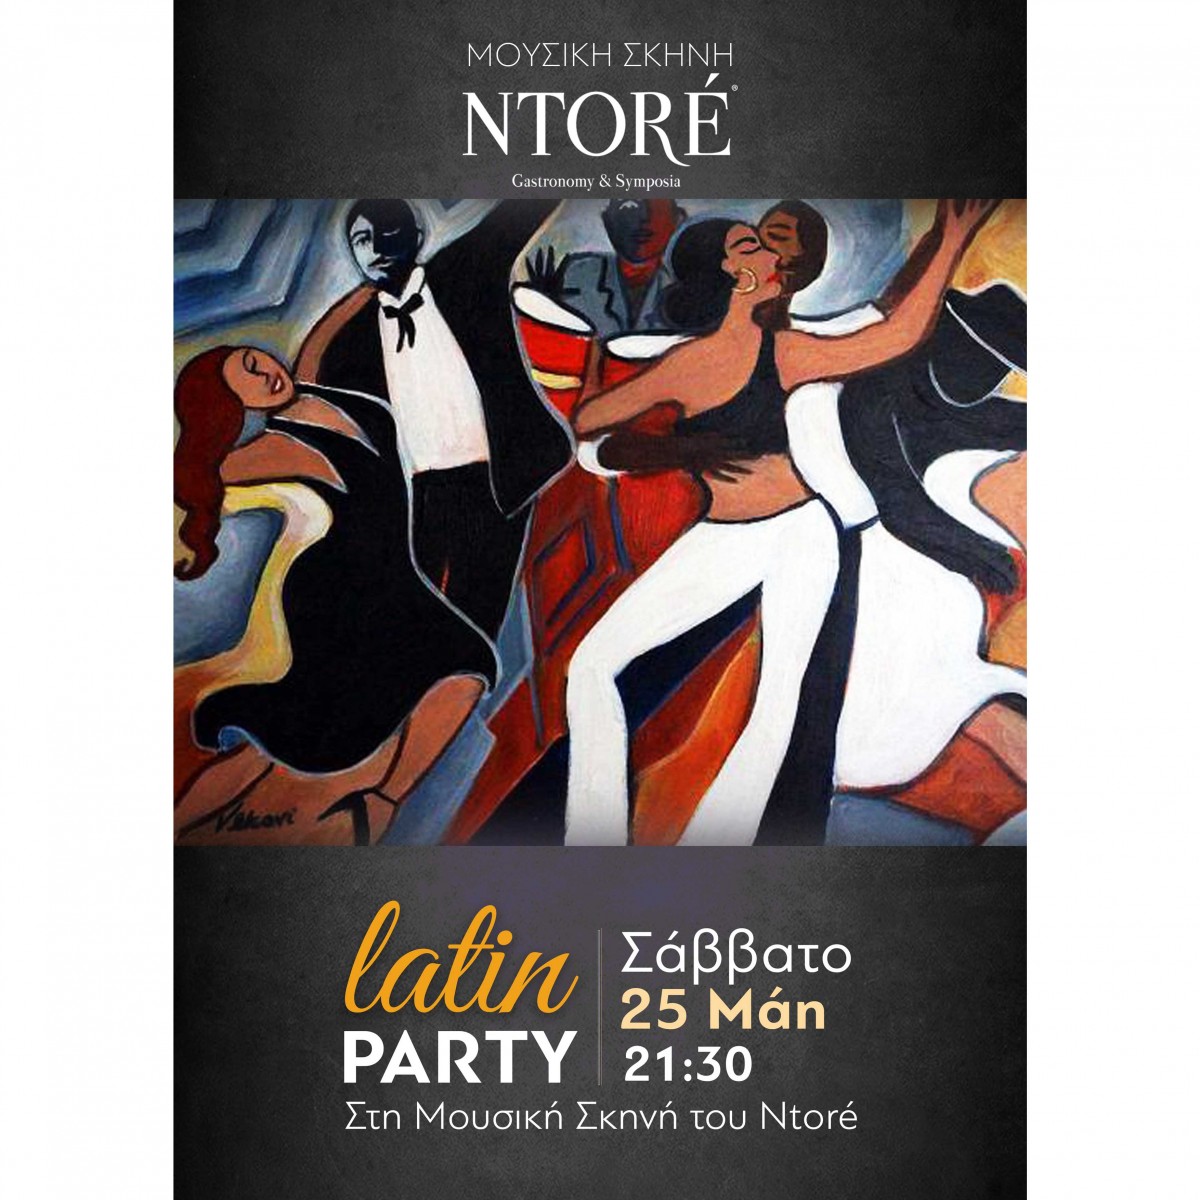 Latin Party στη Μουσική Σκηνή του Ntoré, Σάββατο 25 Μαΐου, 21:30